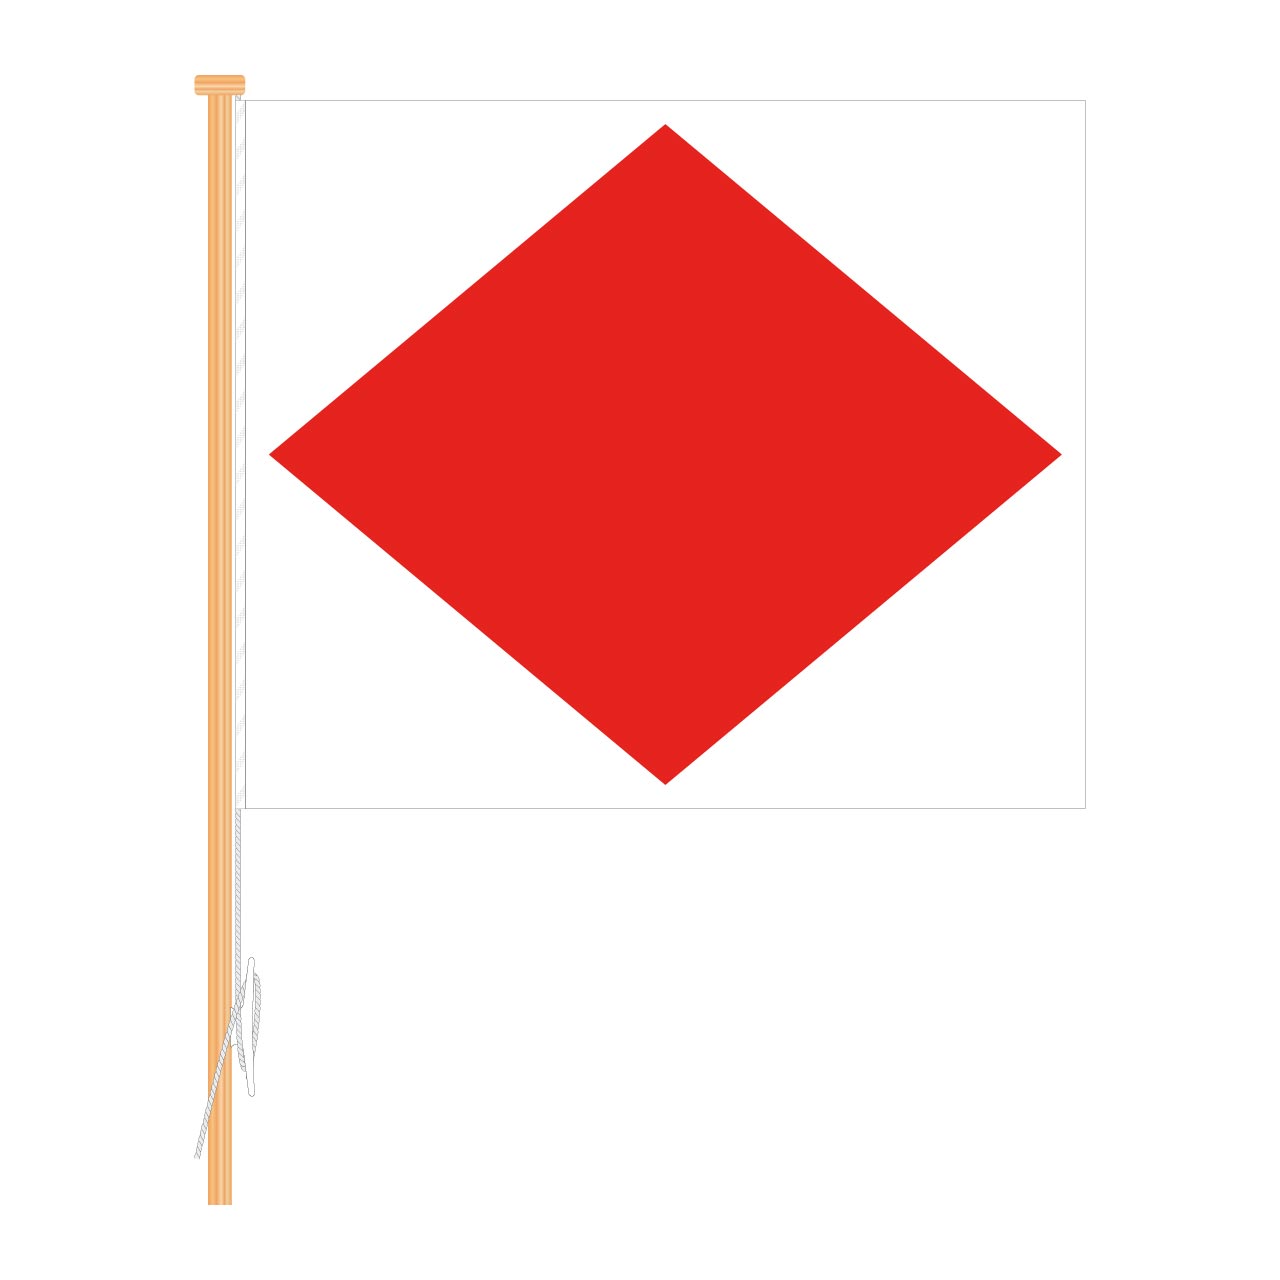 Signalflagge "F" Foxtrot